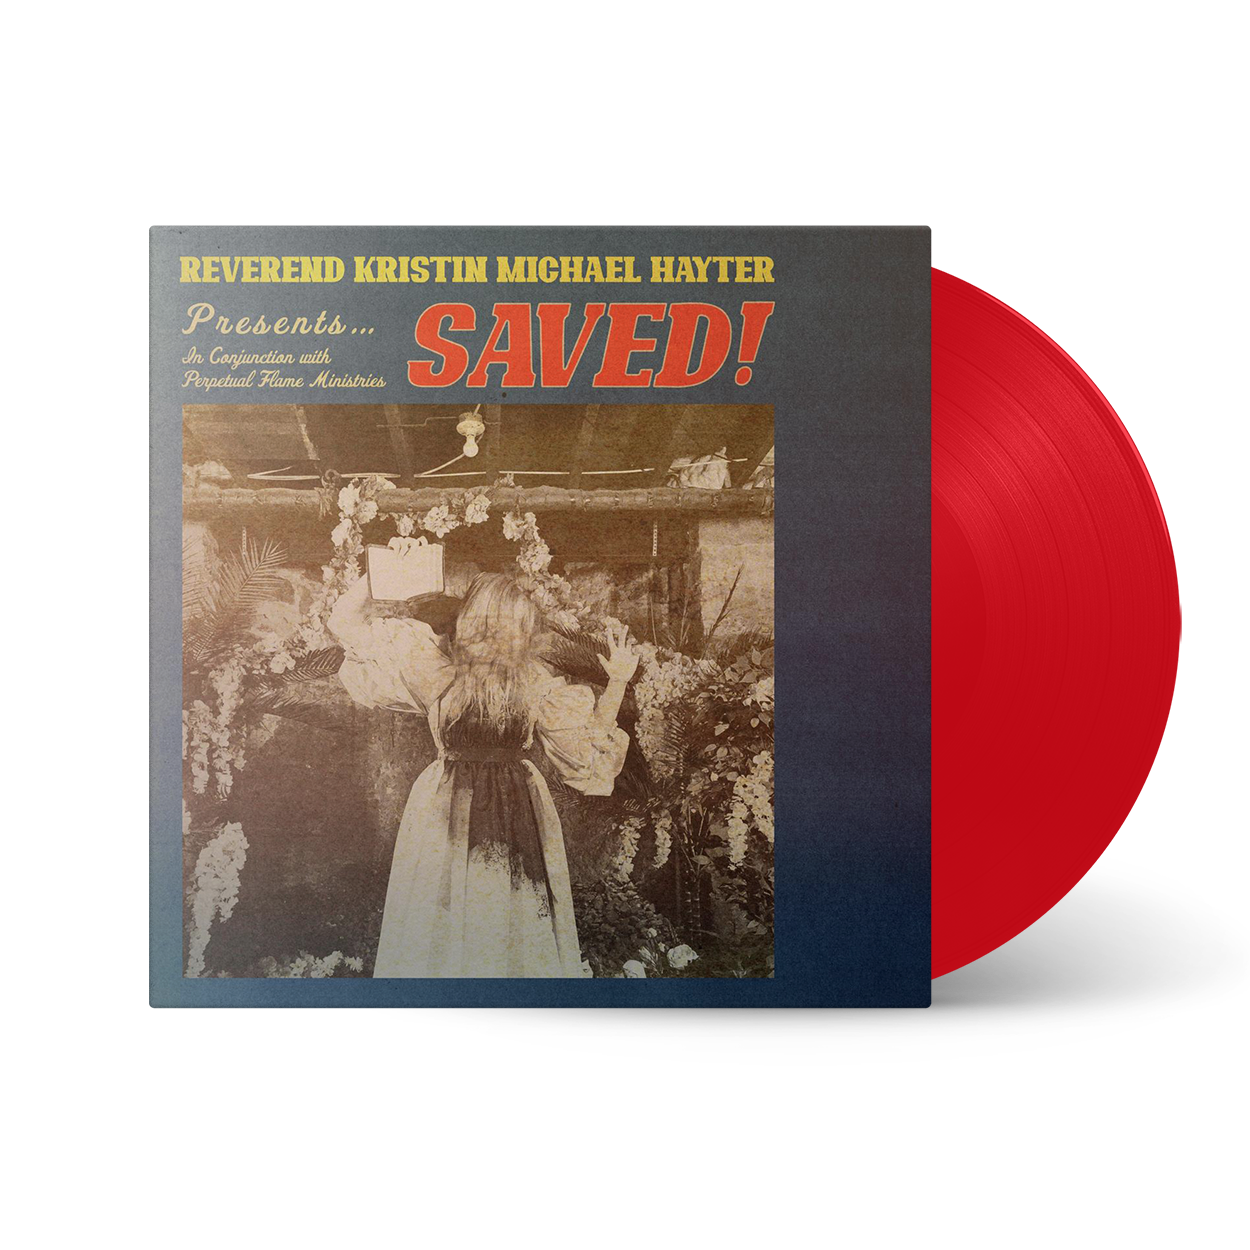 Reverend Kristin Michael Hayter - SAVED! Limited Red Vinyl LP